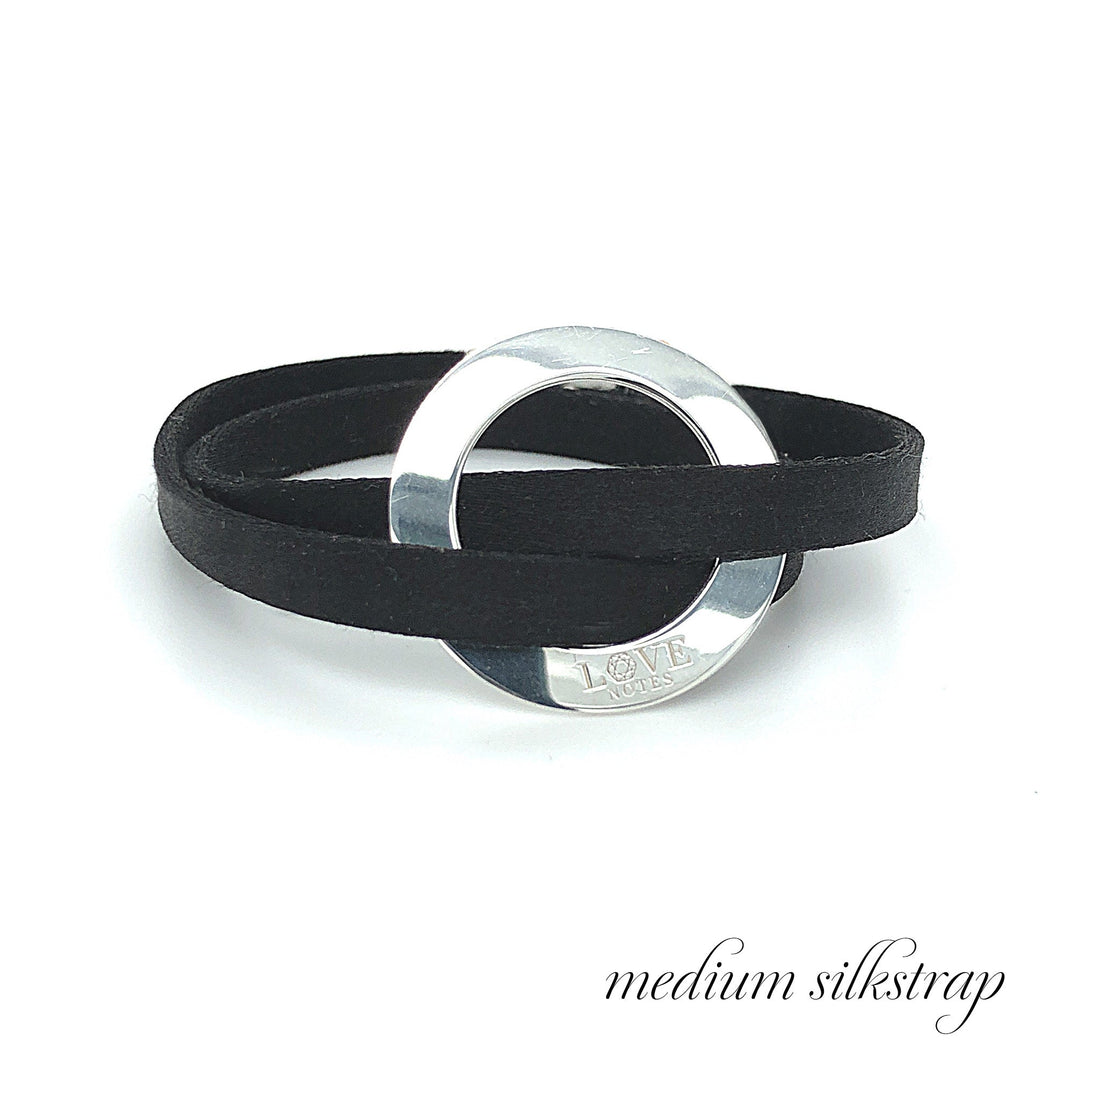 Al segno rondo silver bracelet with medium silkstrap.